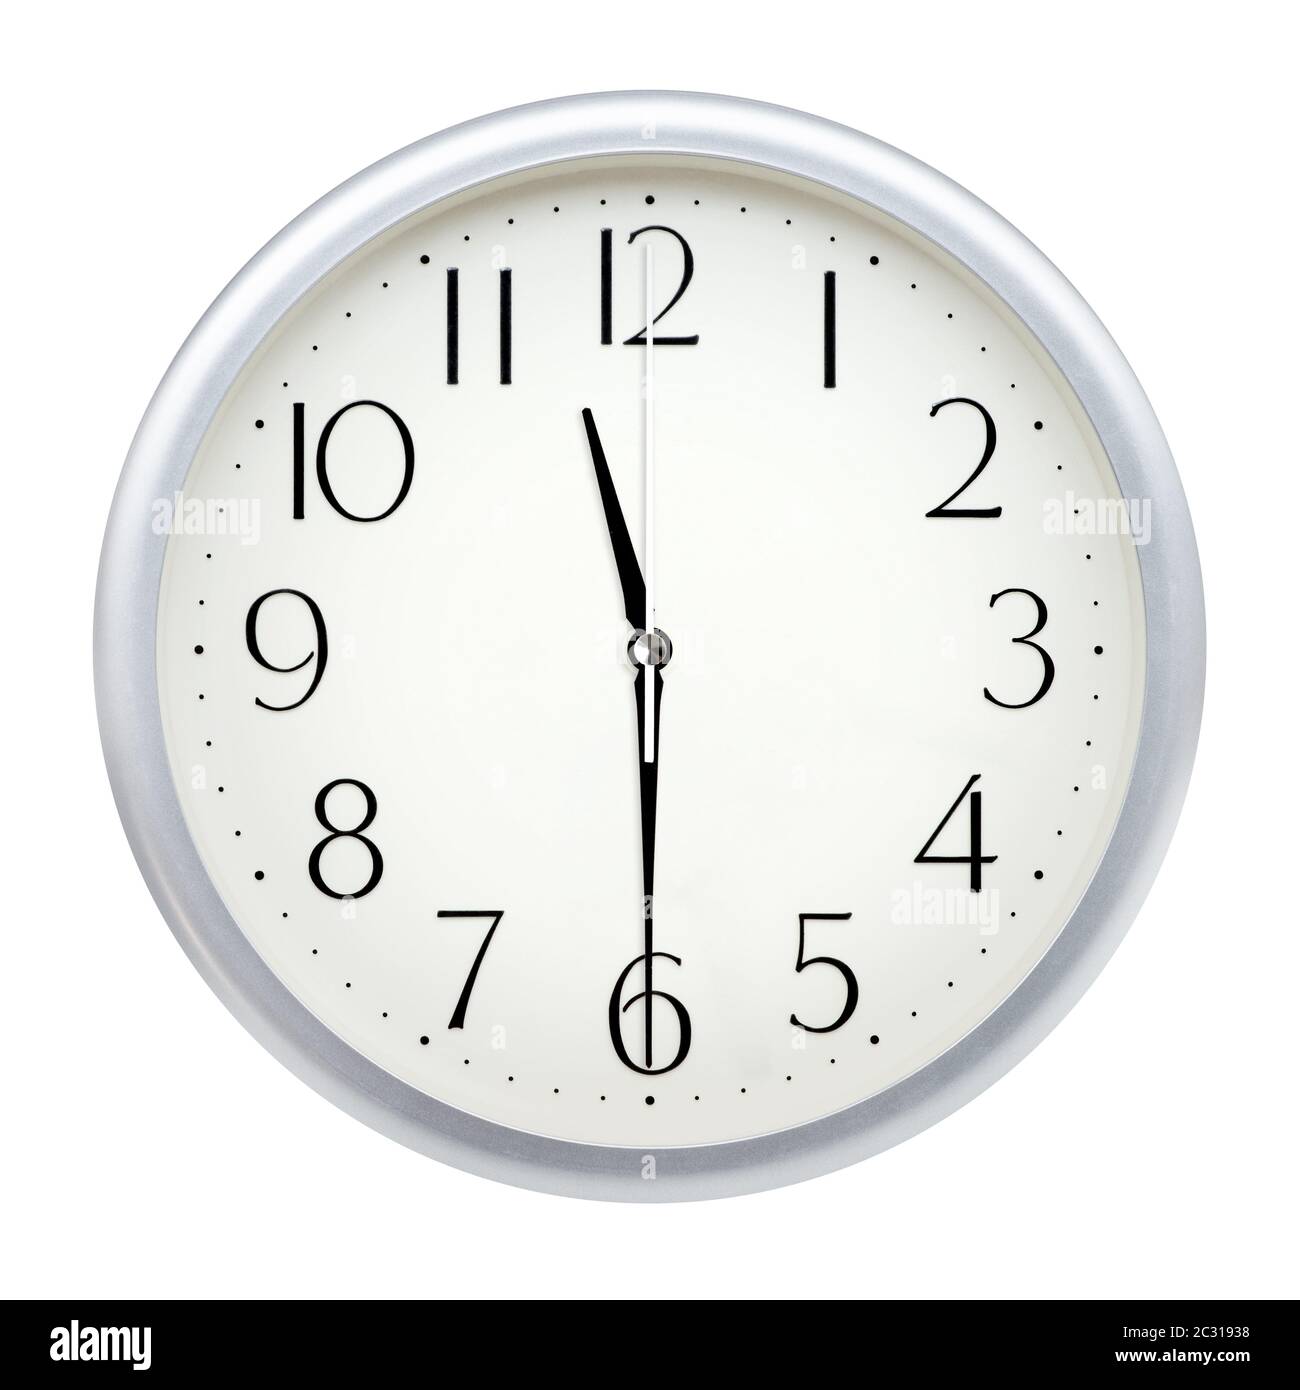 Analog wall clock isolated on white background. Stock Photo